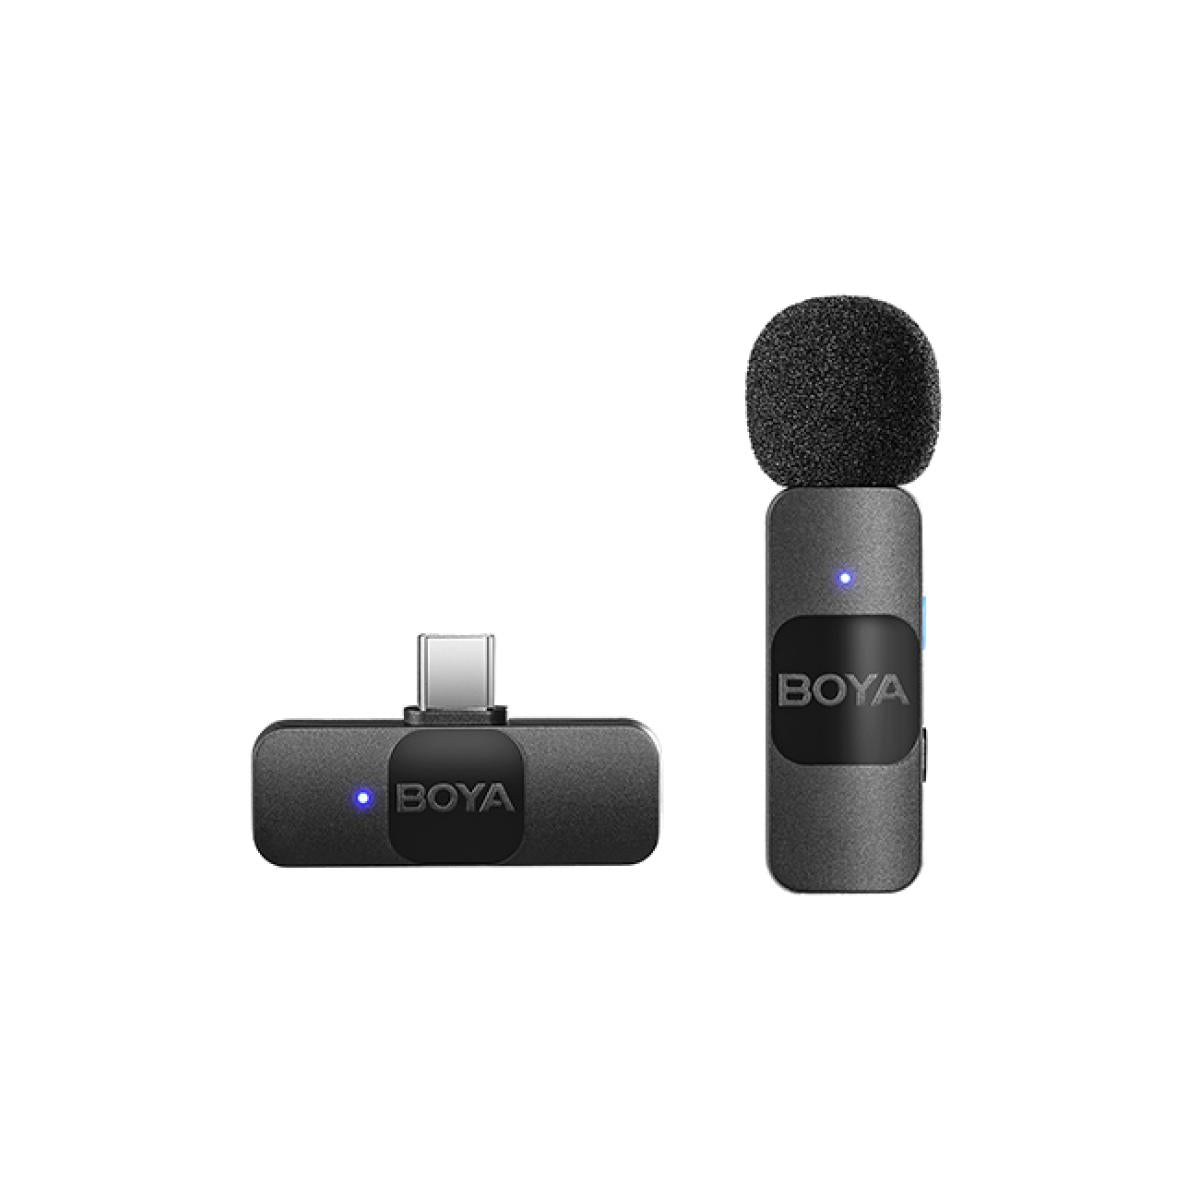 BOYA Ultracompact 2.4GHz Type-C Wireless Microphone System - Black